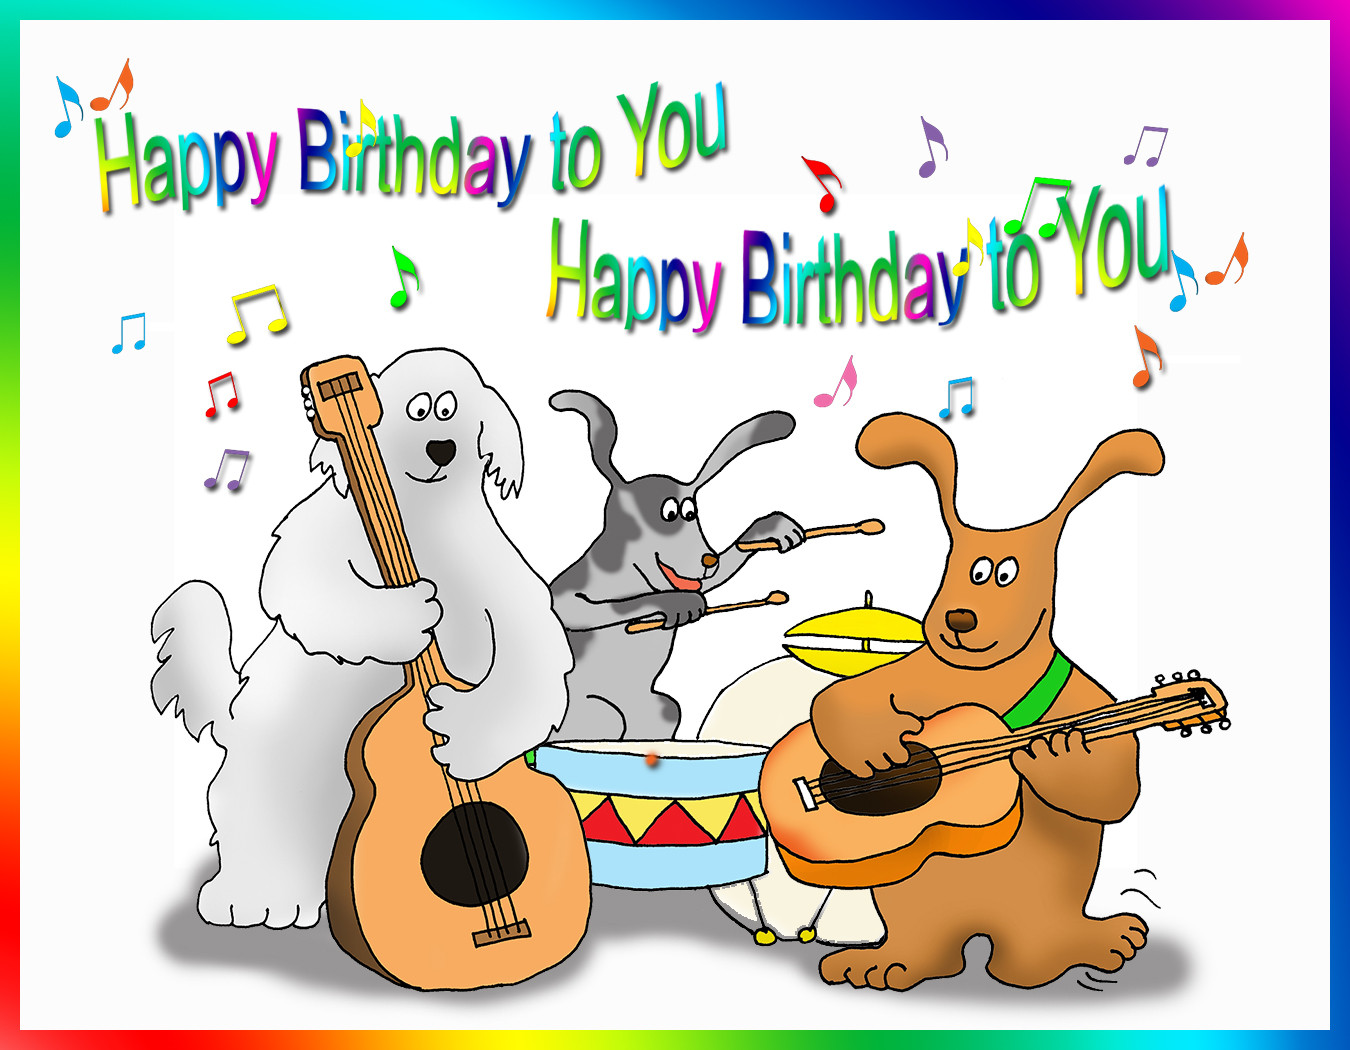 Free Printable Birthday Cards Funny
 Happy Birthday Card for You – Free Printable Greeting Cards